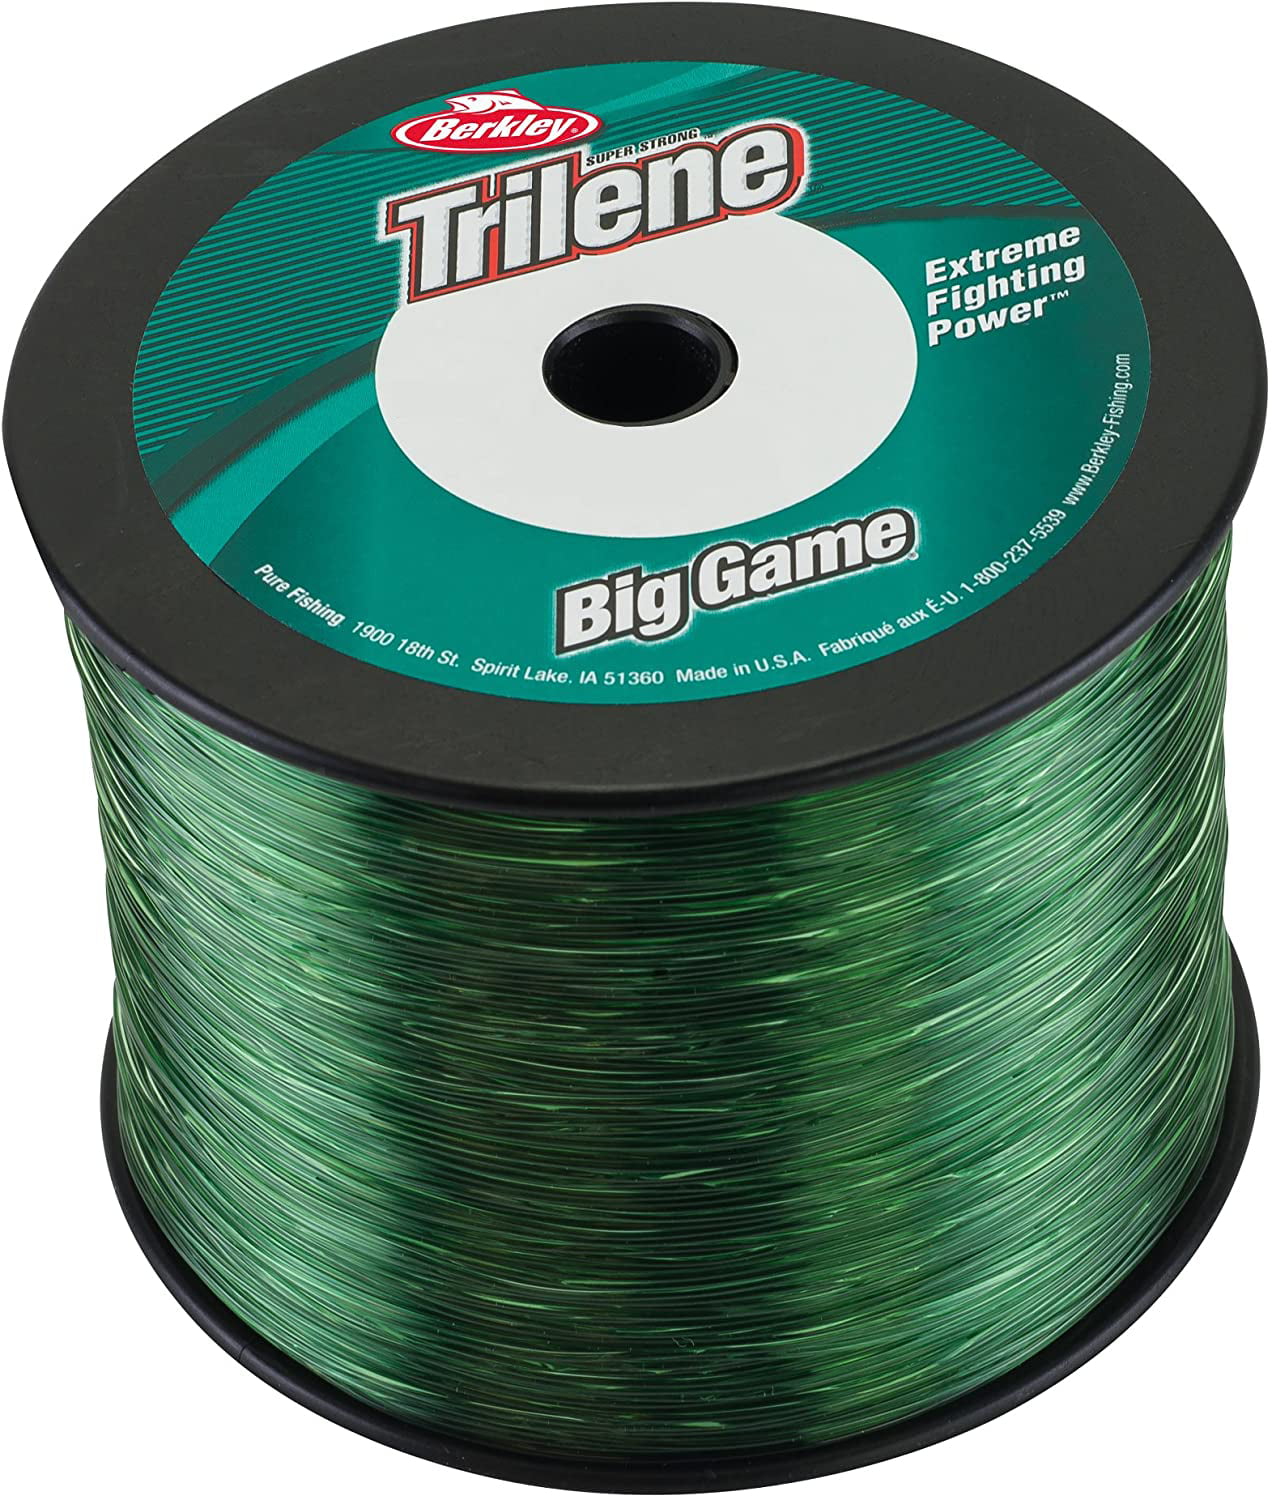 Berkley Trilene Big Game, Green, 50lb 22.6kg Monofilament Fishing